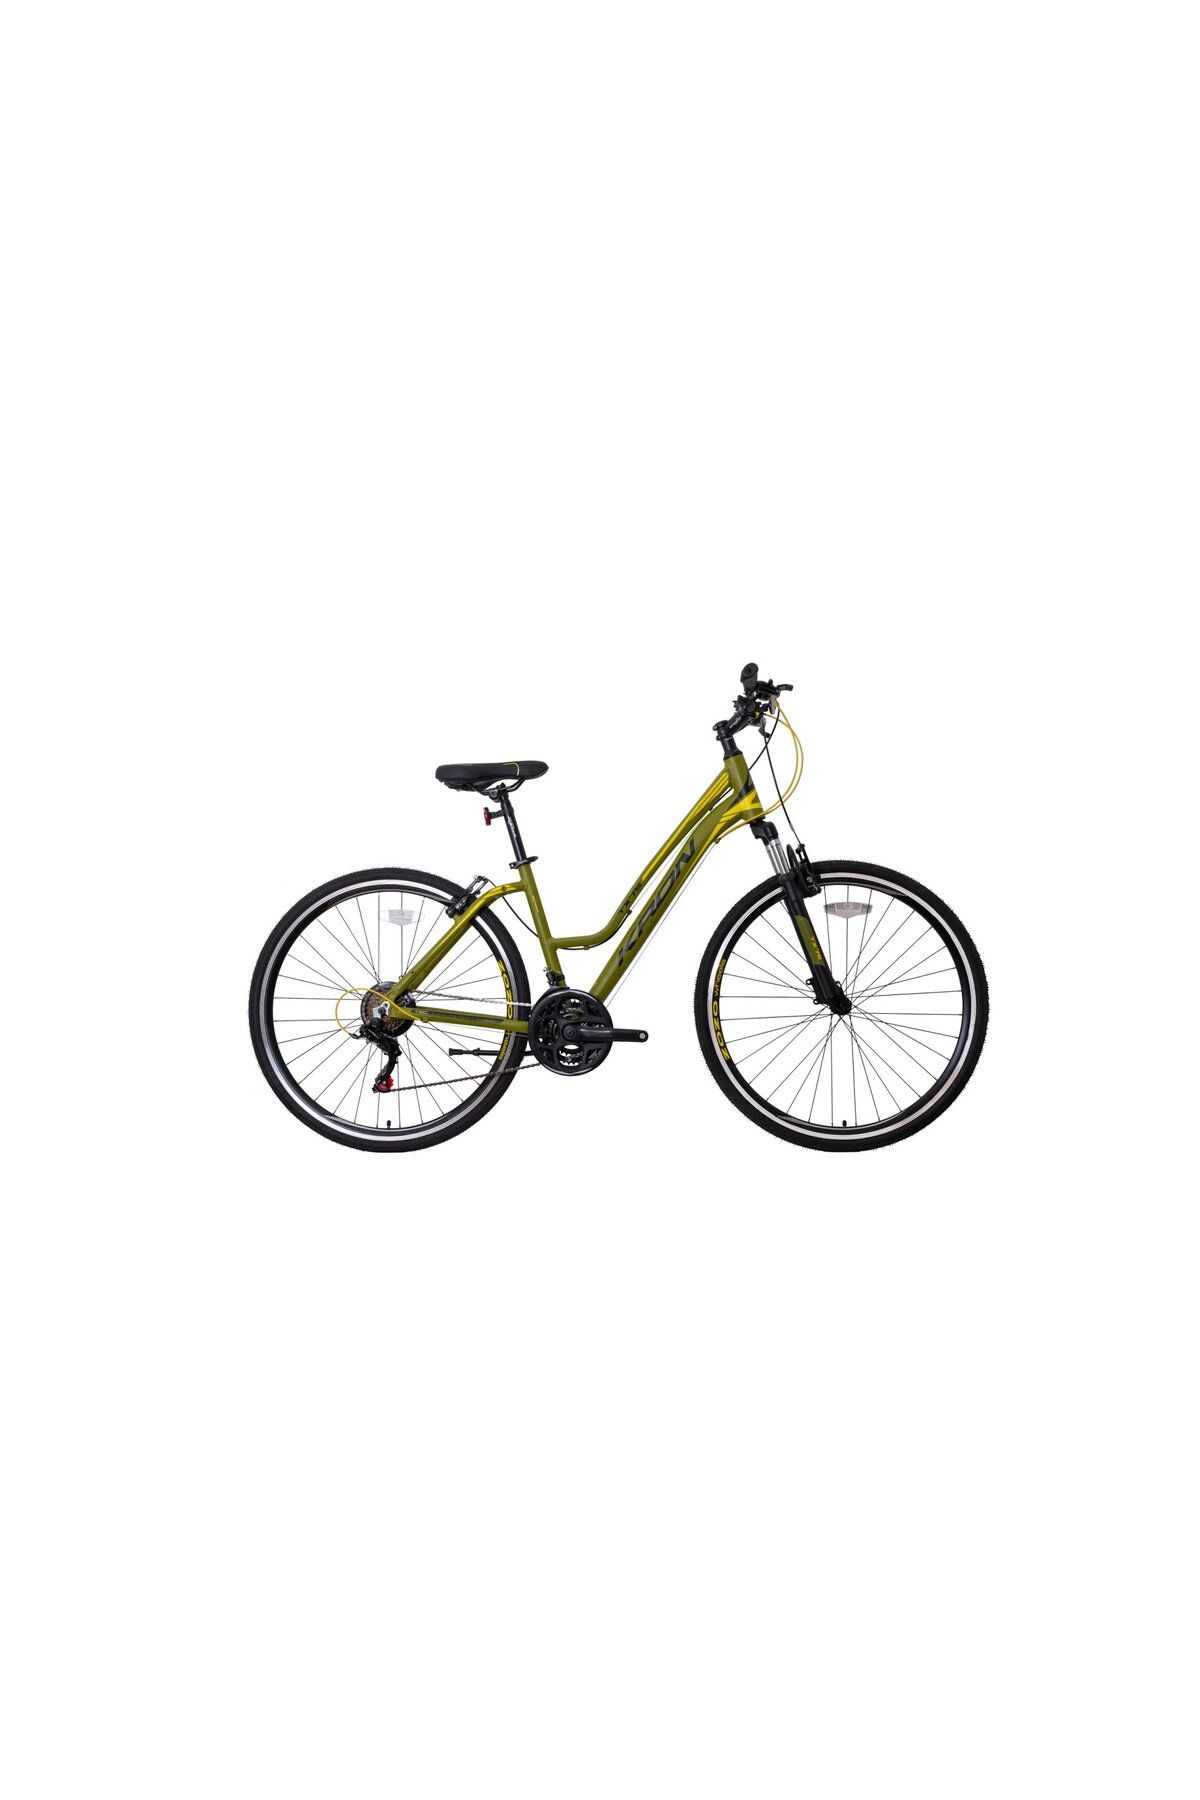 Kron TX75 Lady 28 Jant Trekking Bisiklet Çağla Yeşil Sarı Siyah 38 cm